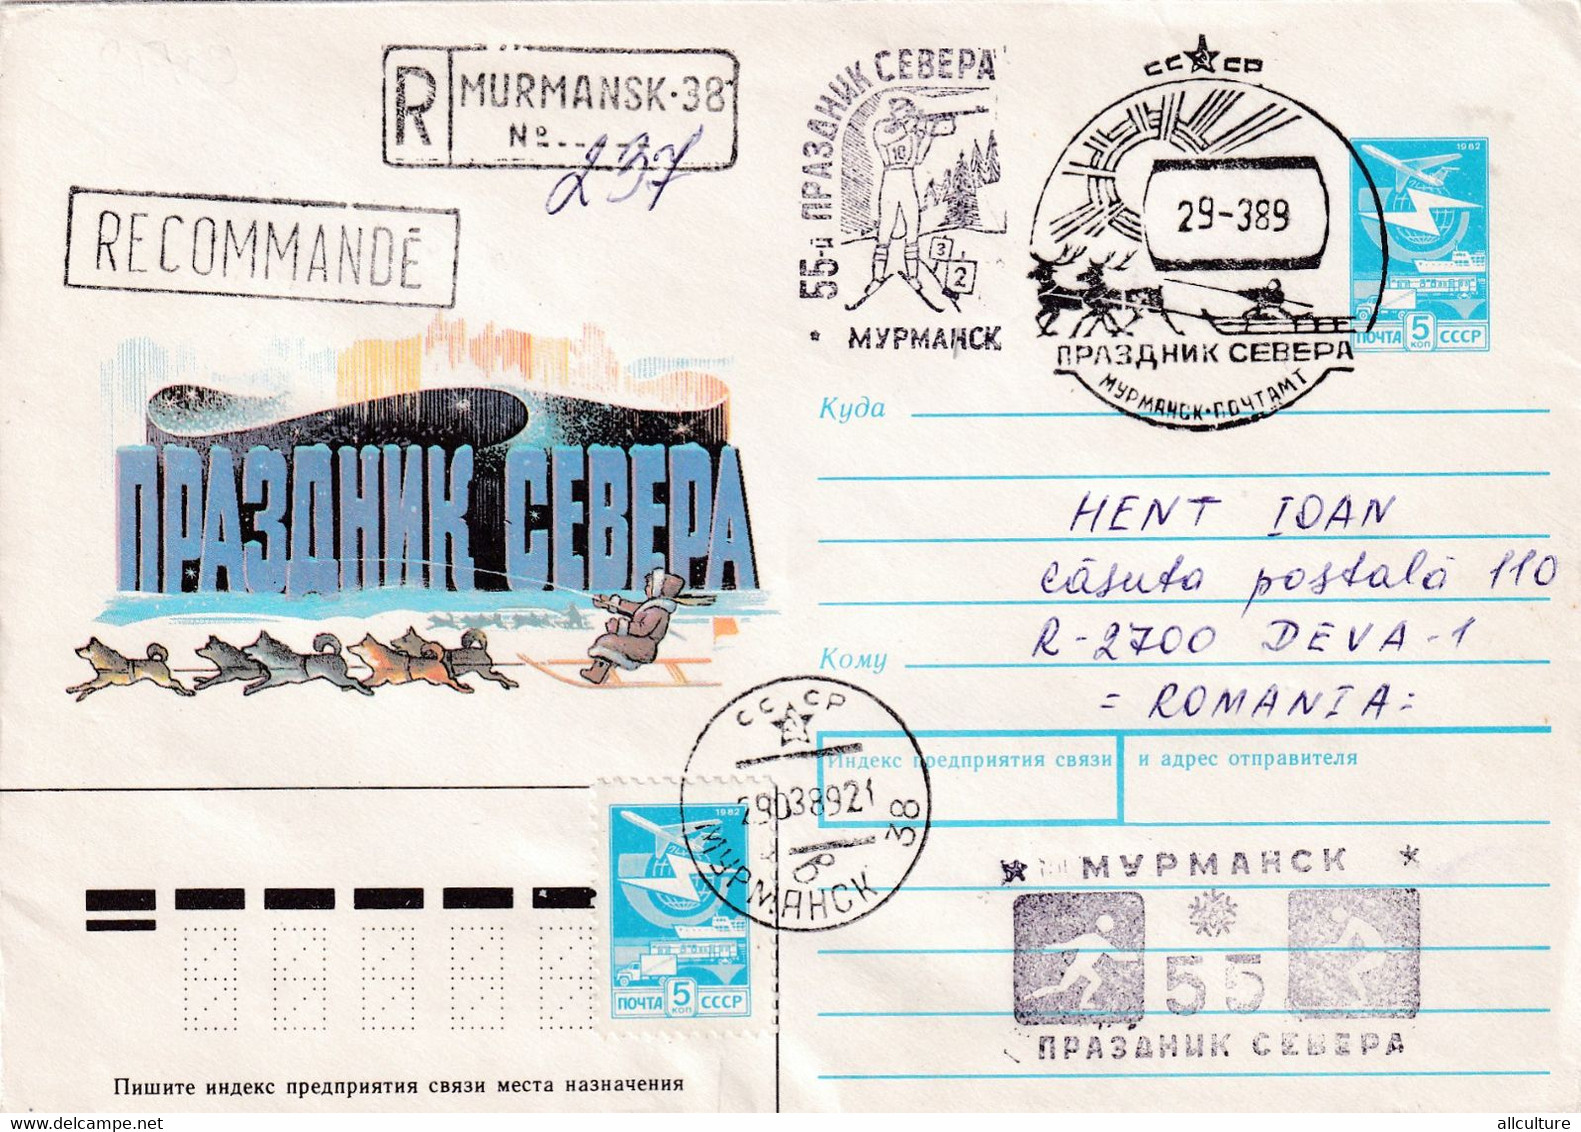 A8152- REGISTRED LETTER MURMANSK, HOLIDAY OF THE NORTH, 1989 USSR POSTAL STATIONERY SENT TO DEVA ROMANIA - Eventos Y Conmemoraciones